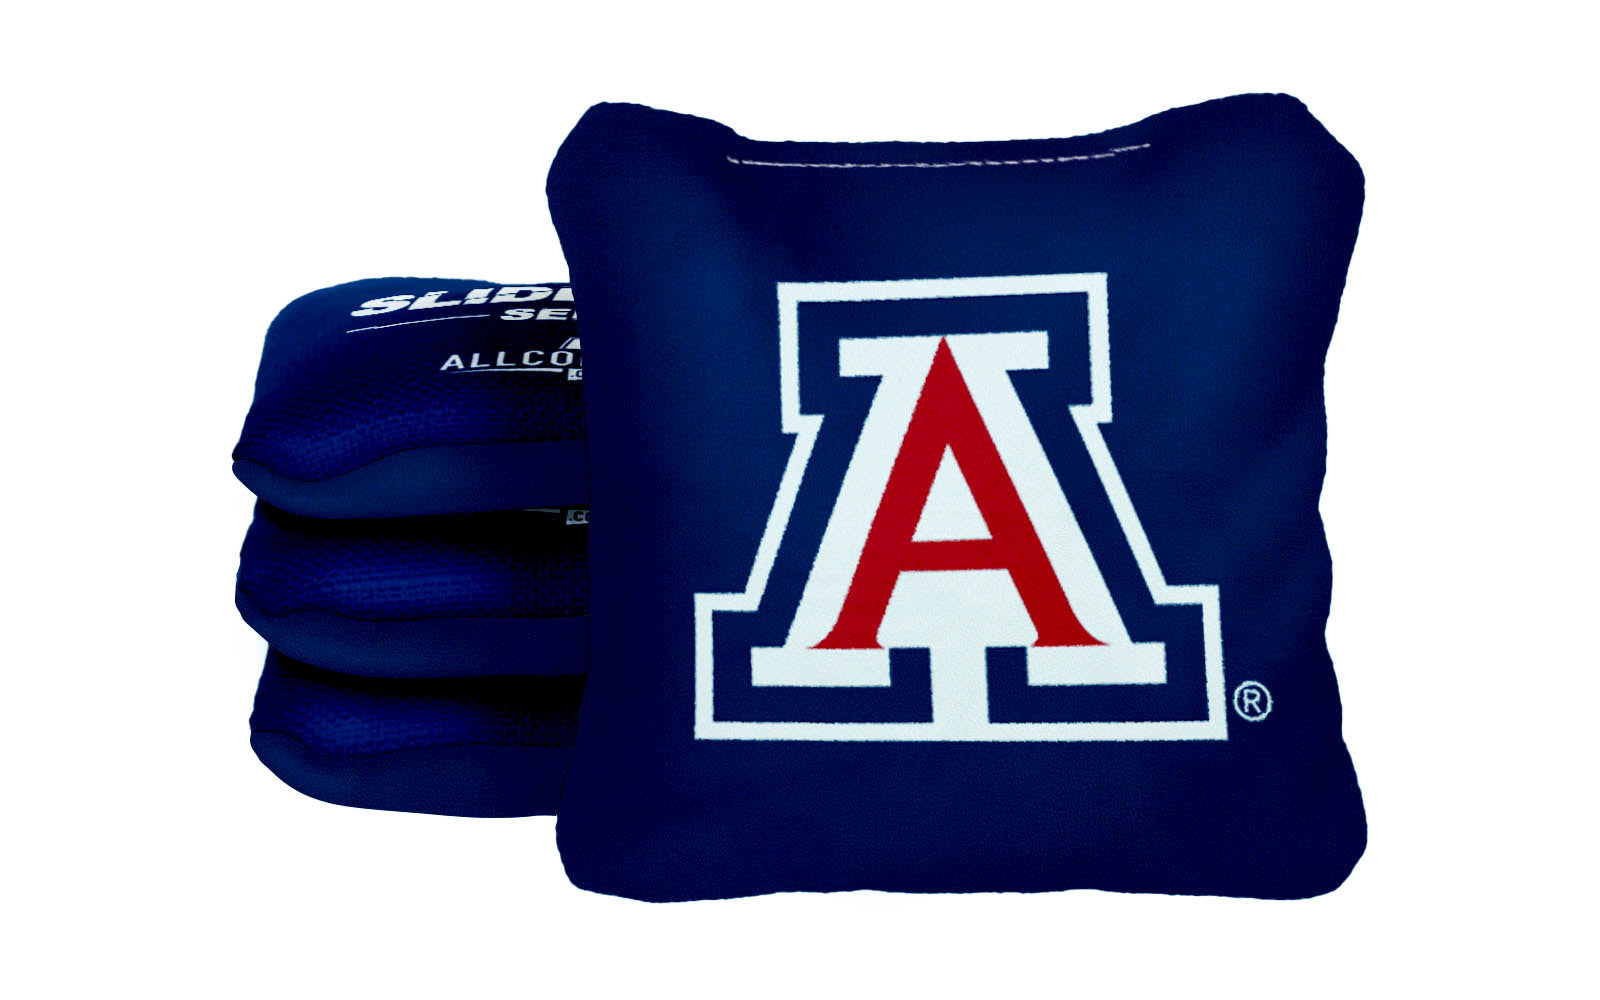 Officially Licensed Collegiate Cornhole Bags - AllCornhole Slide Rite - Set of 4 - University of Arizona